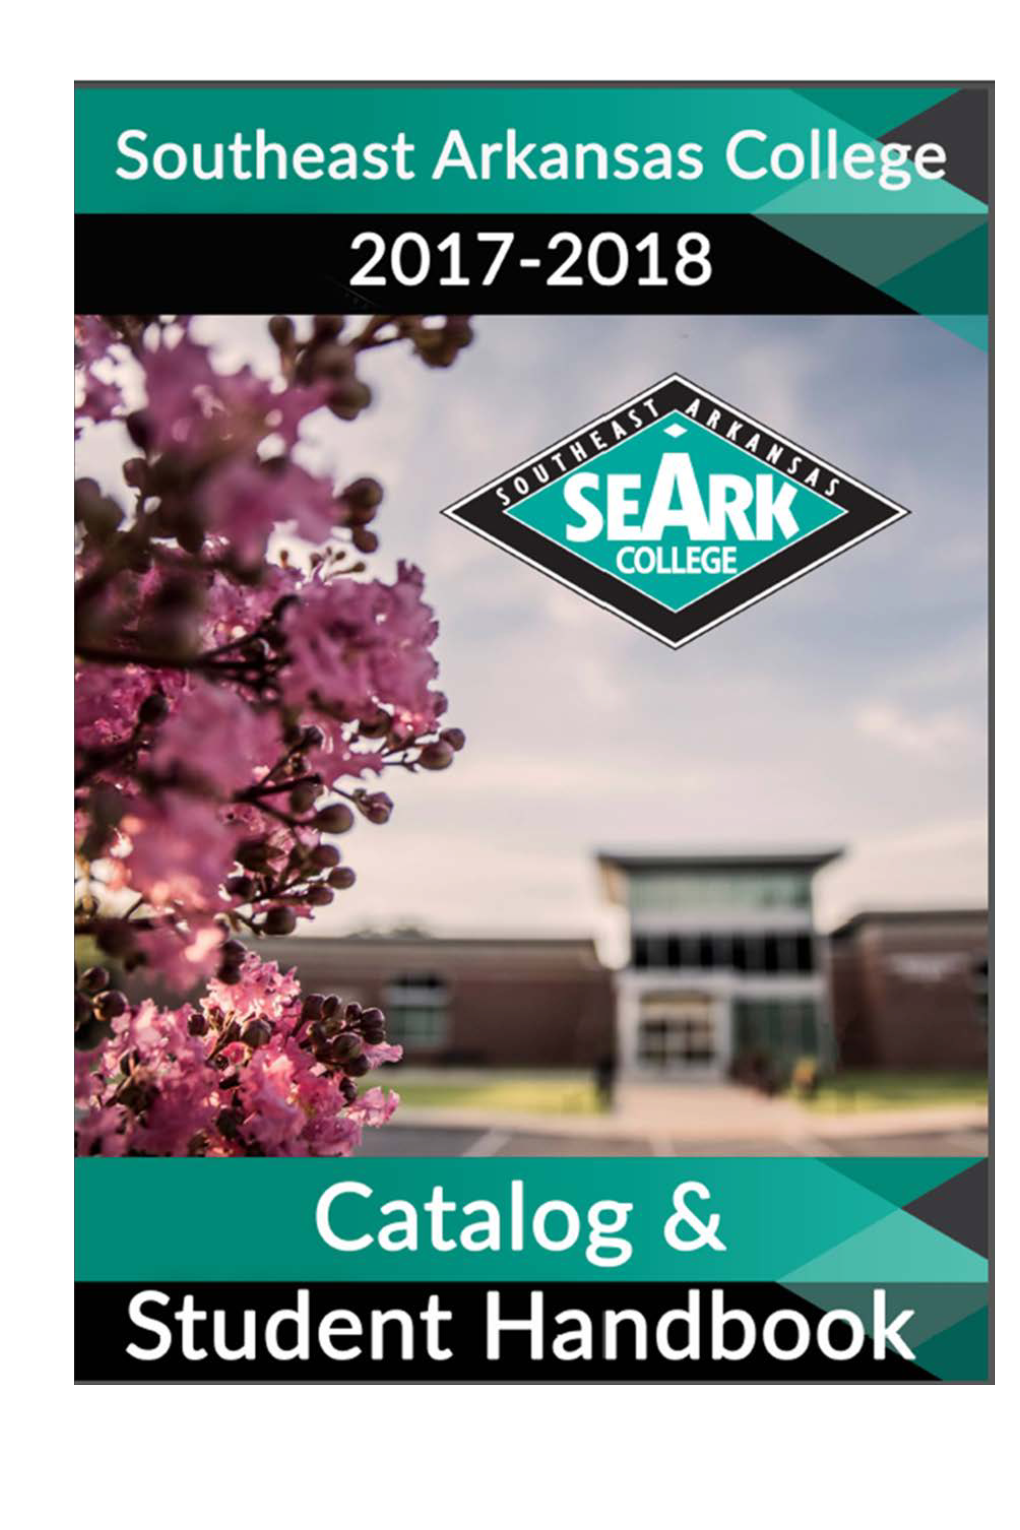 2017-2018 Catalog and Student Handbook